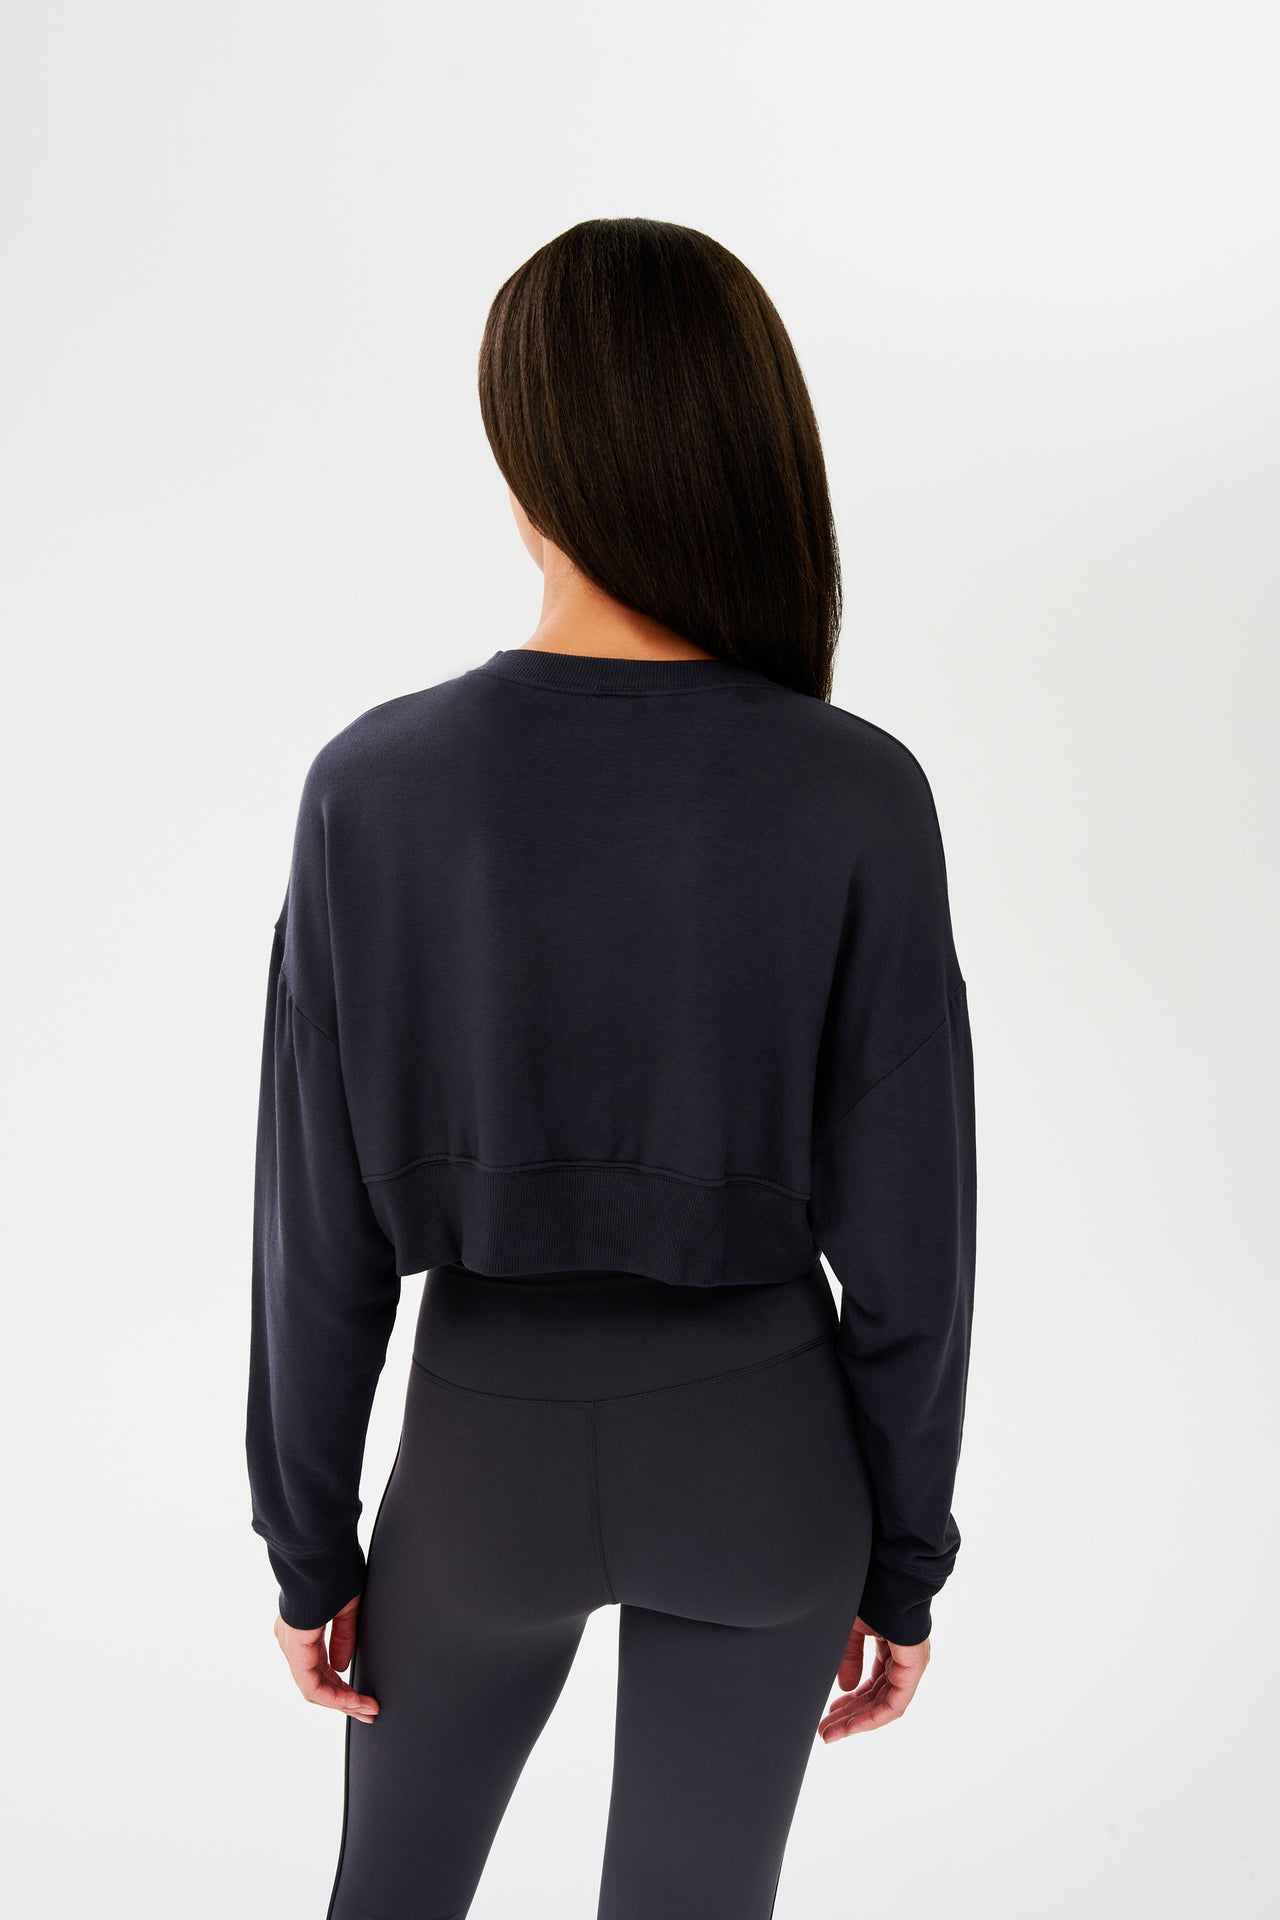 The back view of a woman wearing black leggings and a SPLITS59 Noah Fleece Crop Sweatshirt in Graphite.